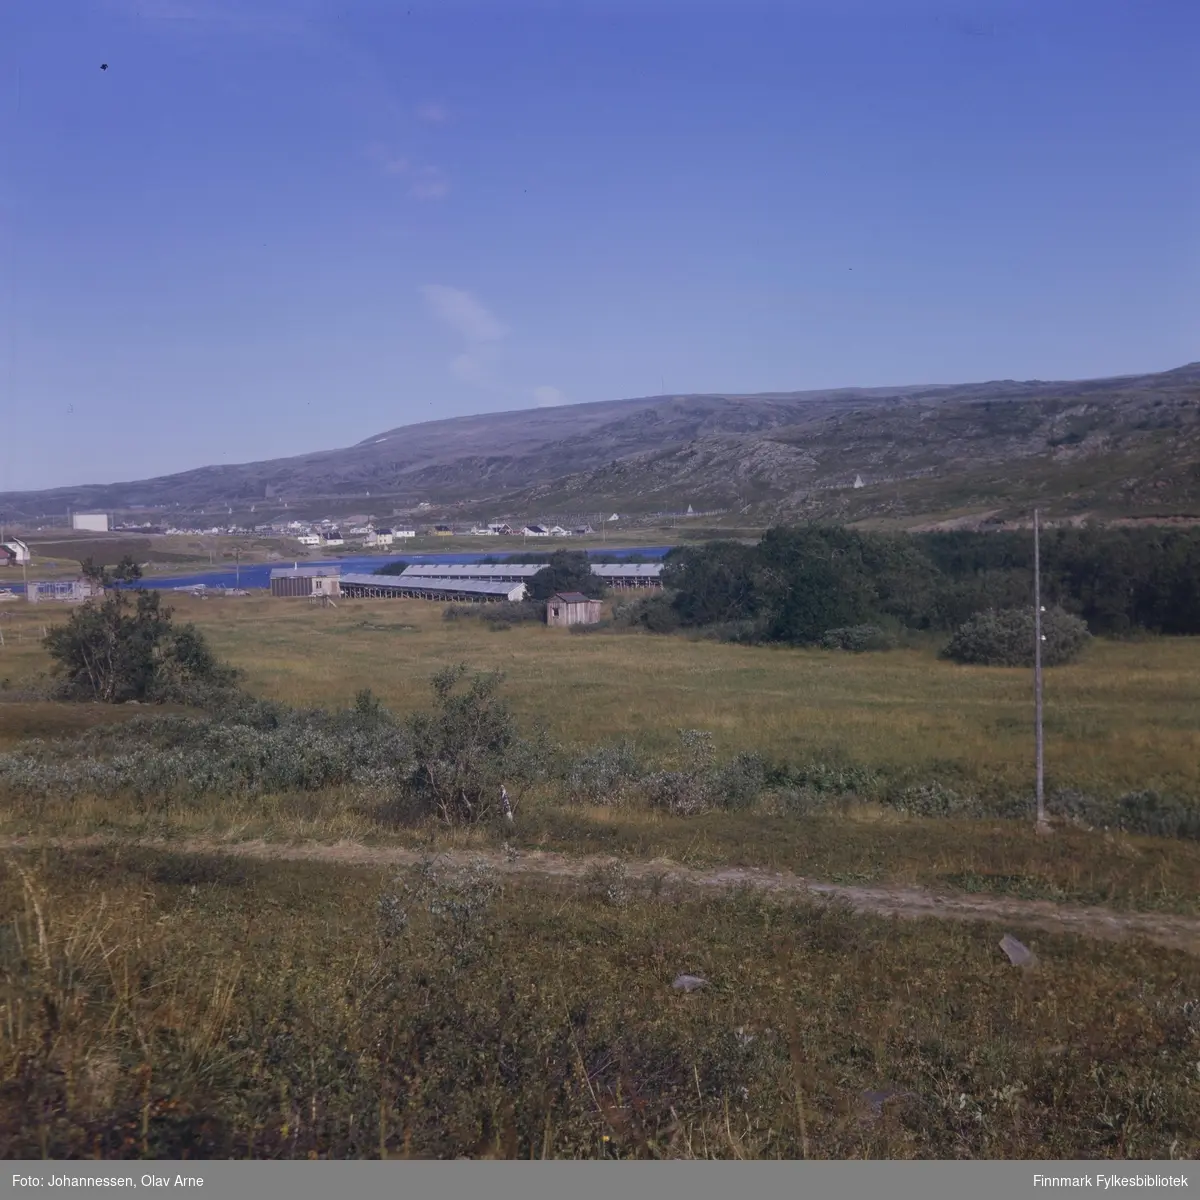 Foto er speilvendt

Foto av minkfarm/revefarm i Båtsfjord 

Trolig tatt på 1970-tallet